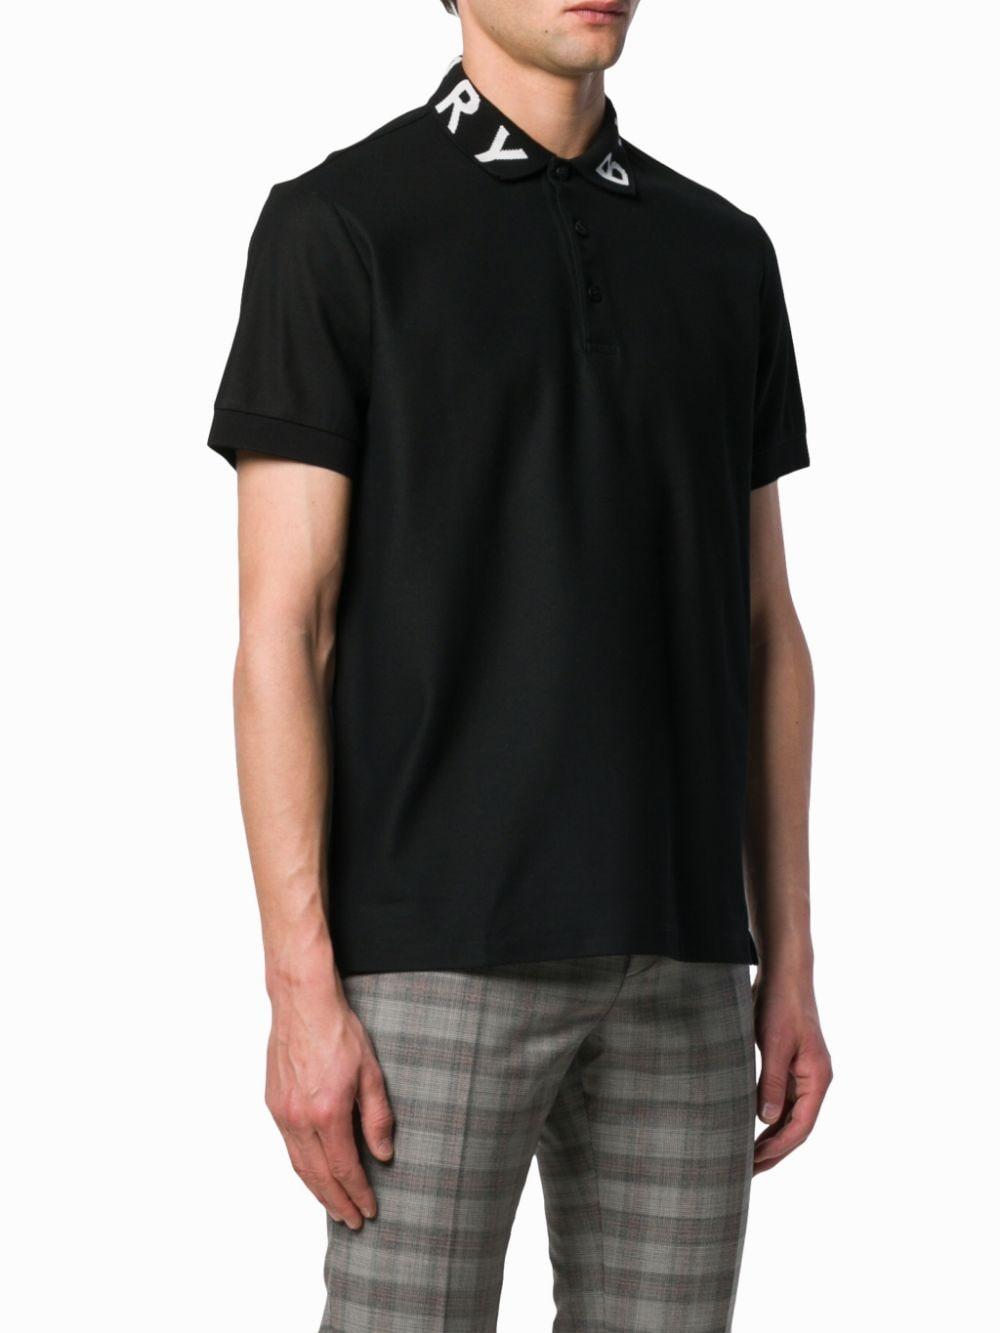 Burberry Cotton Logo Collar Polo Shirt in Black for Men - Lyst